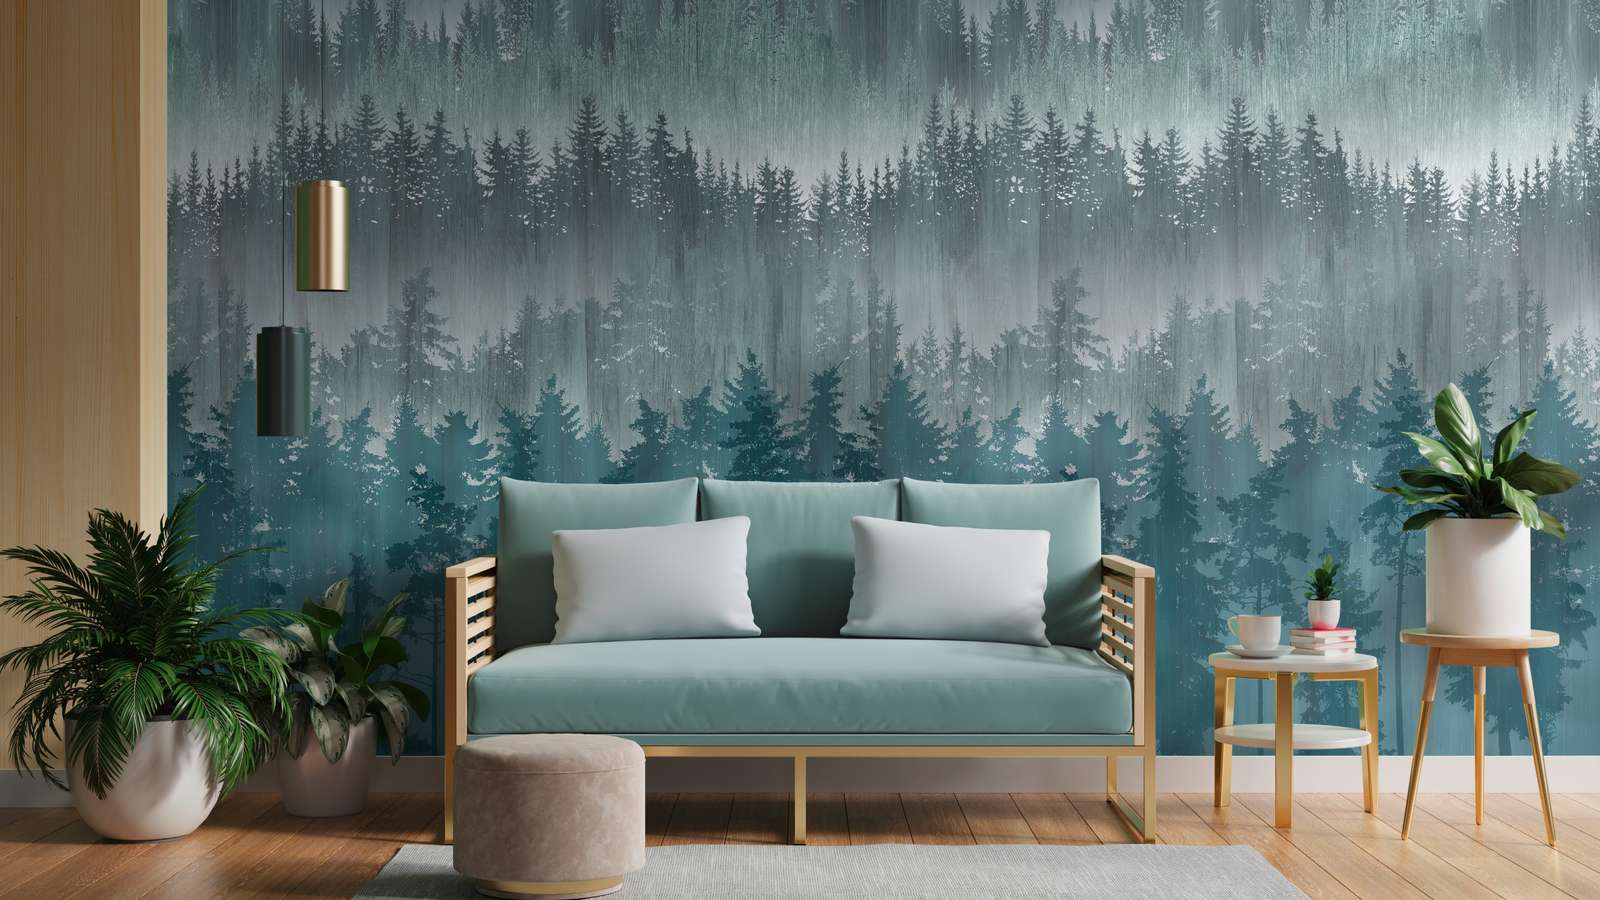             Papel pintado no tejido con motivo de bosque abstracto - azul, gris, petróleo
        